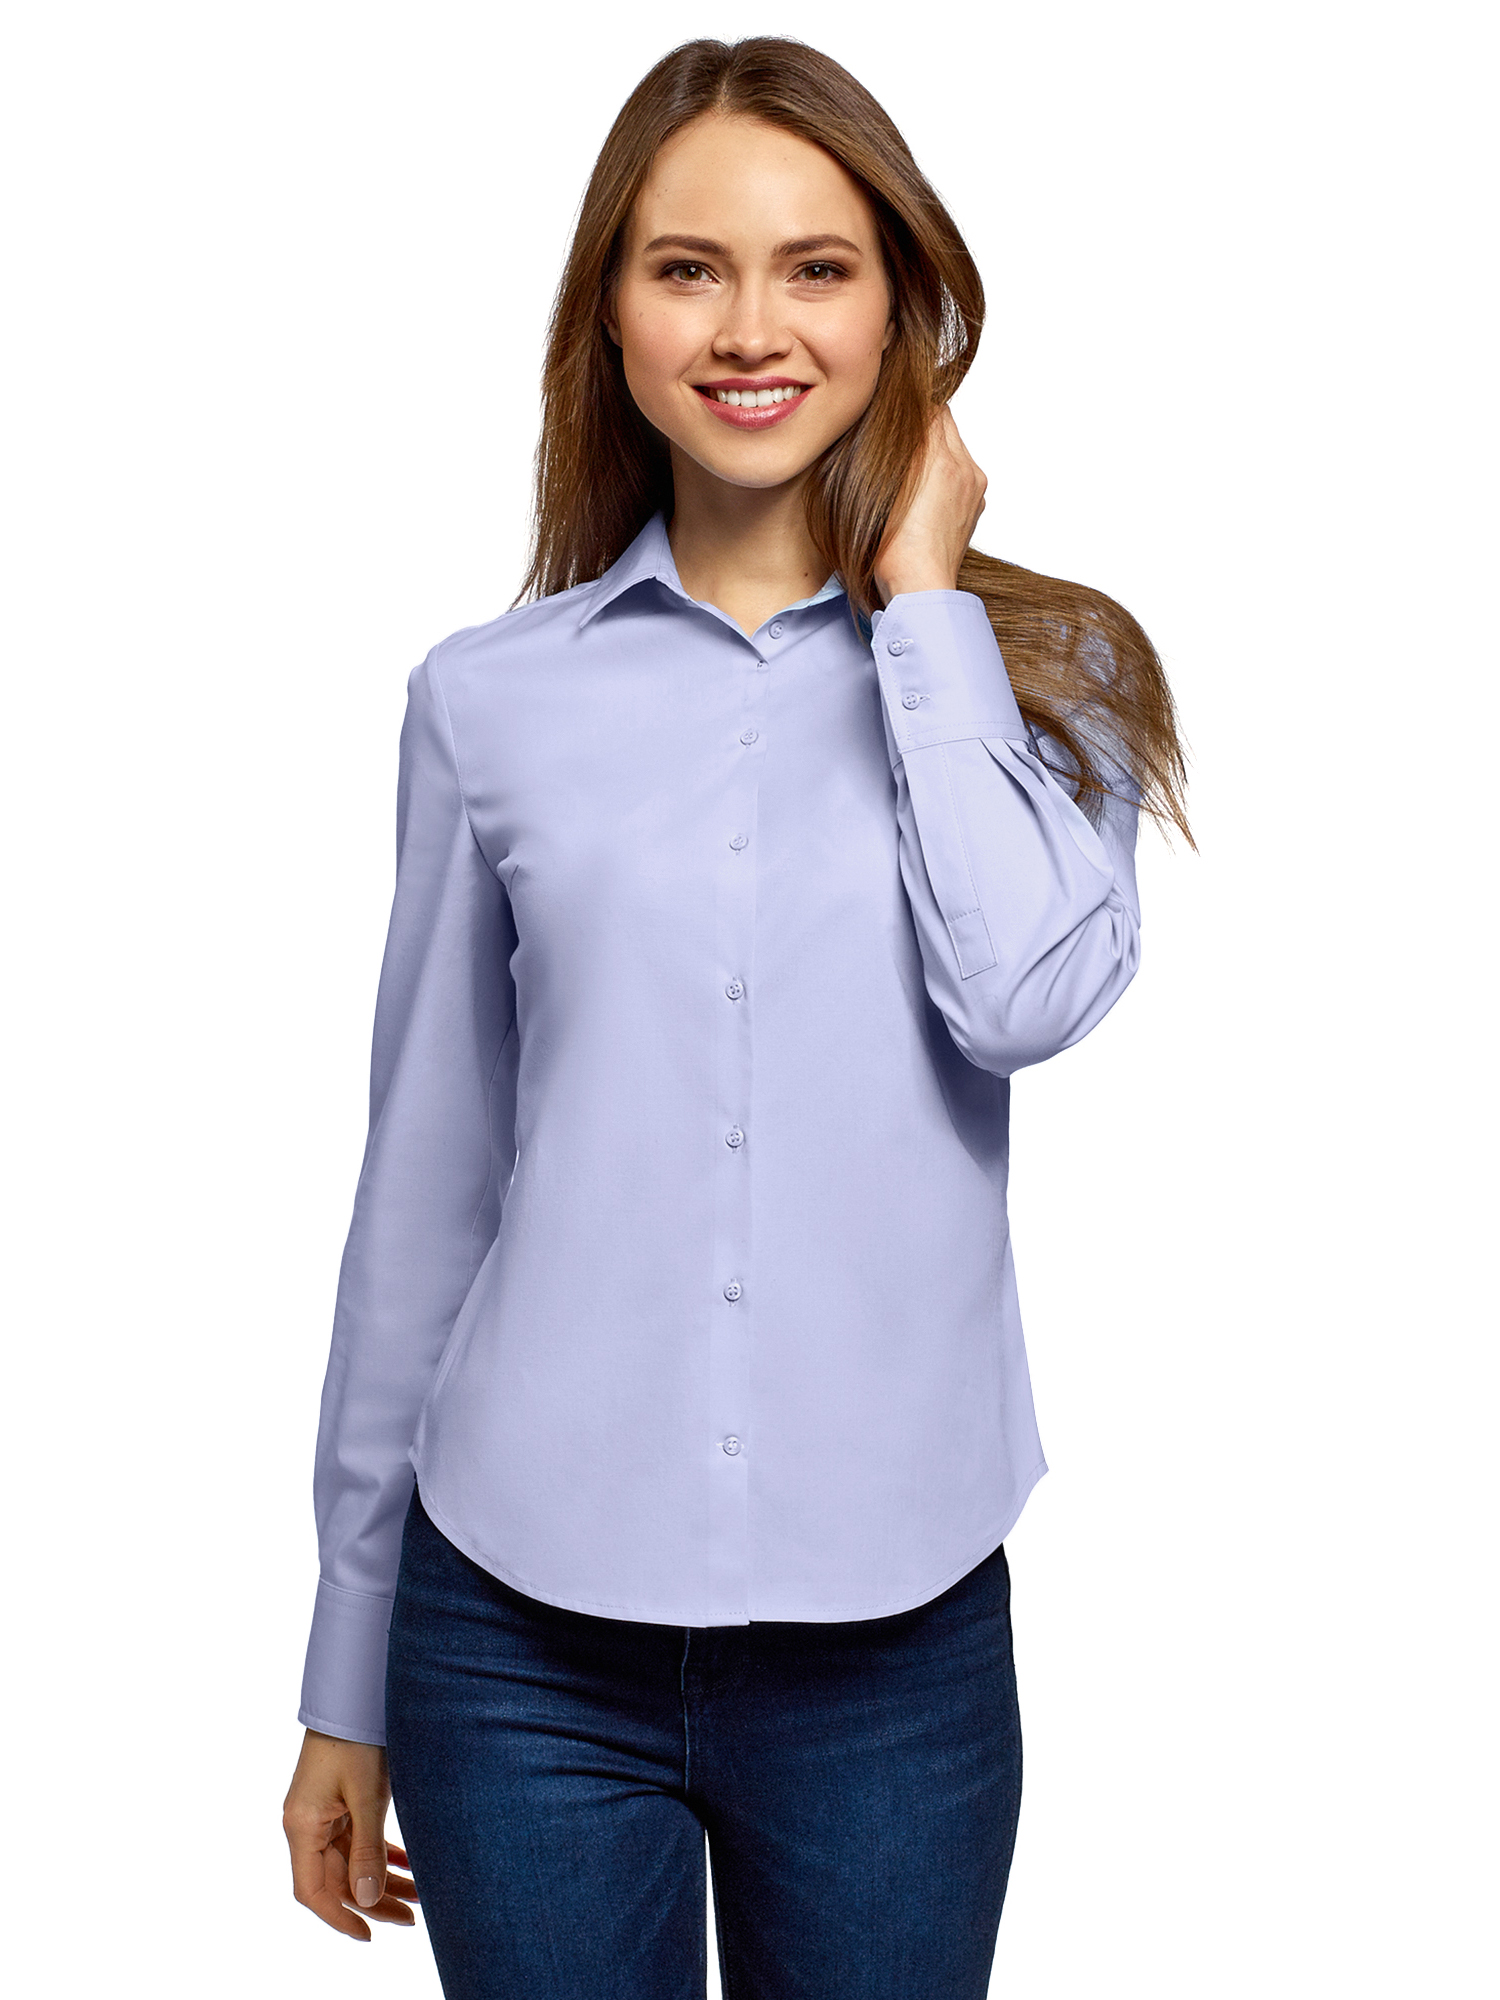 Рубашка женская oodji 13K03001-1B синяя 38/170